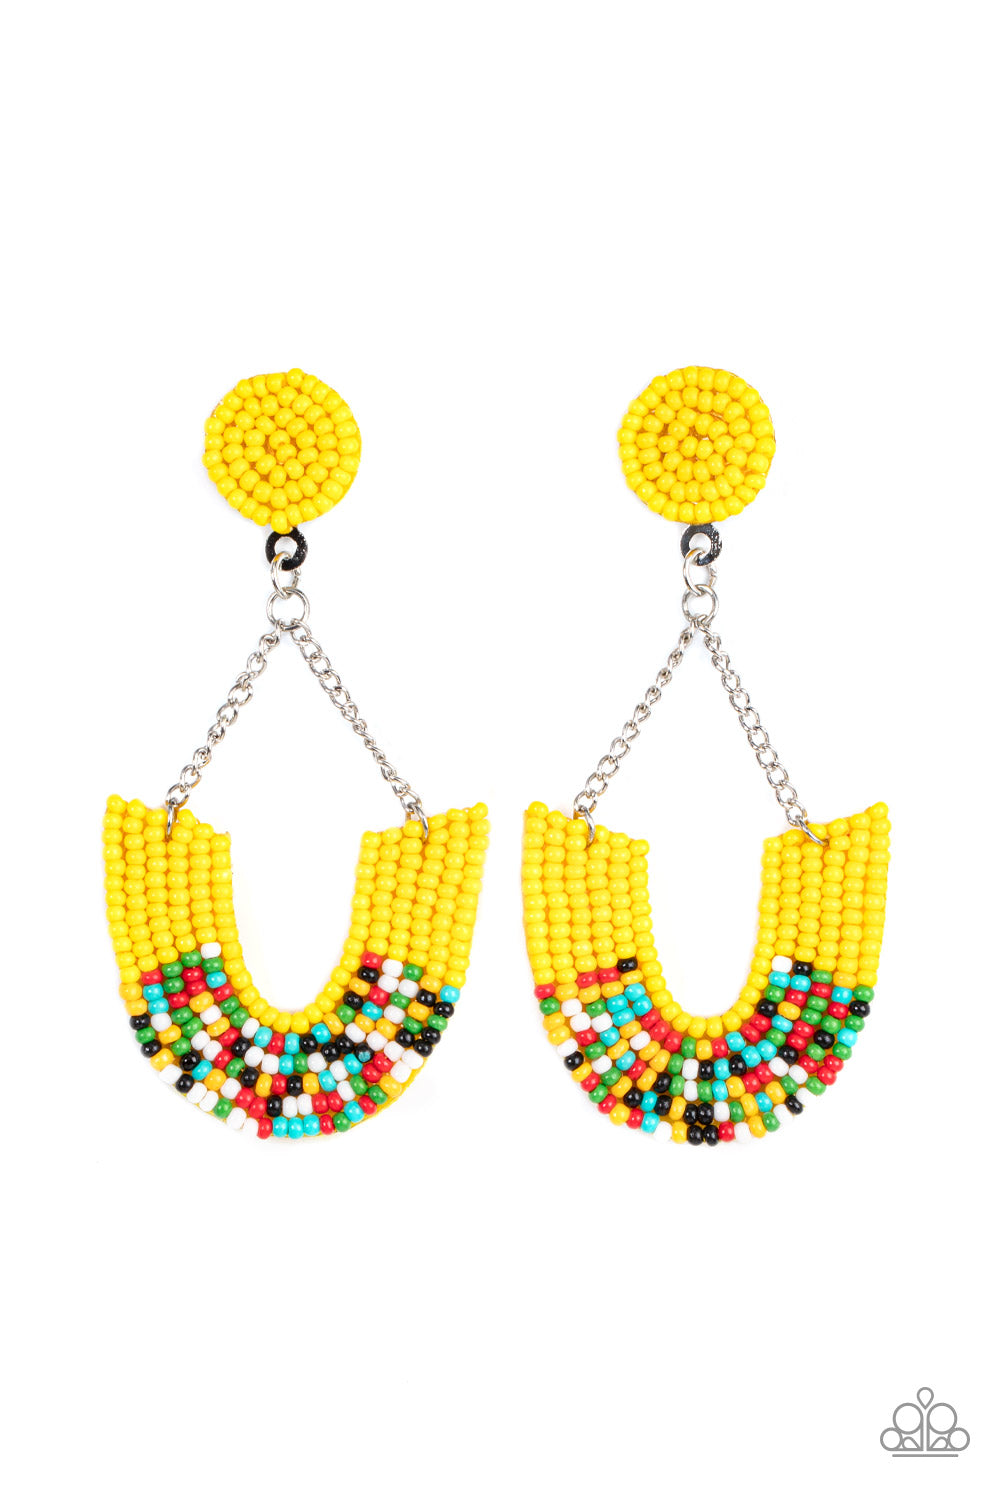 Paparazzi Accessories - Make it RAINBOW #E624 - Yellow Earrings